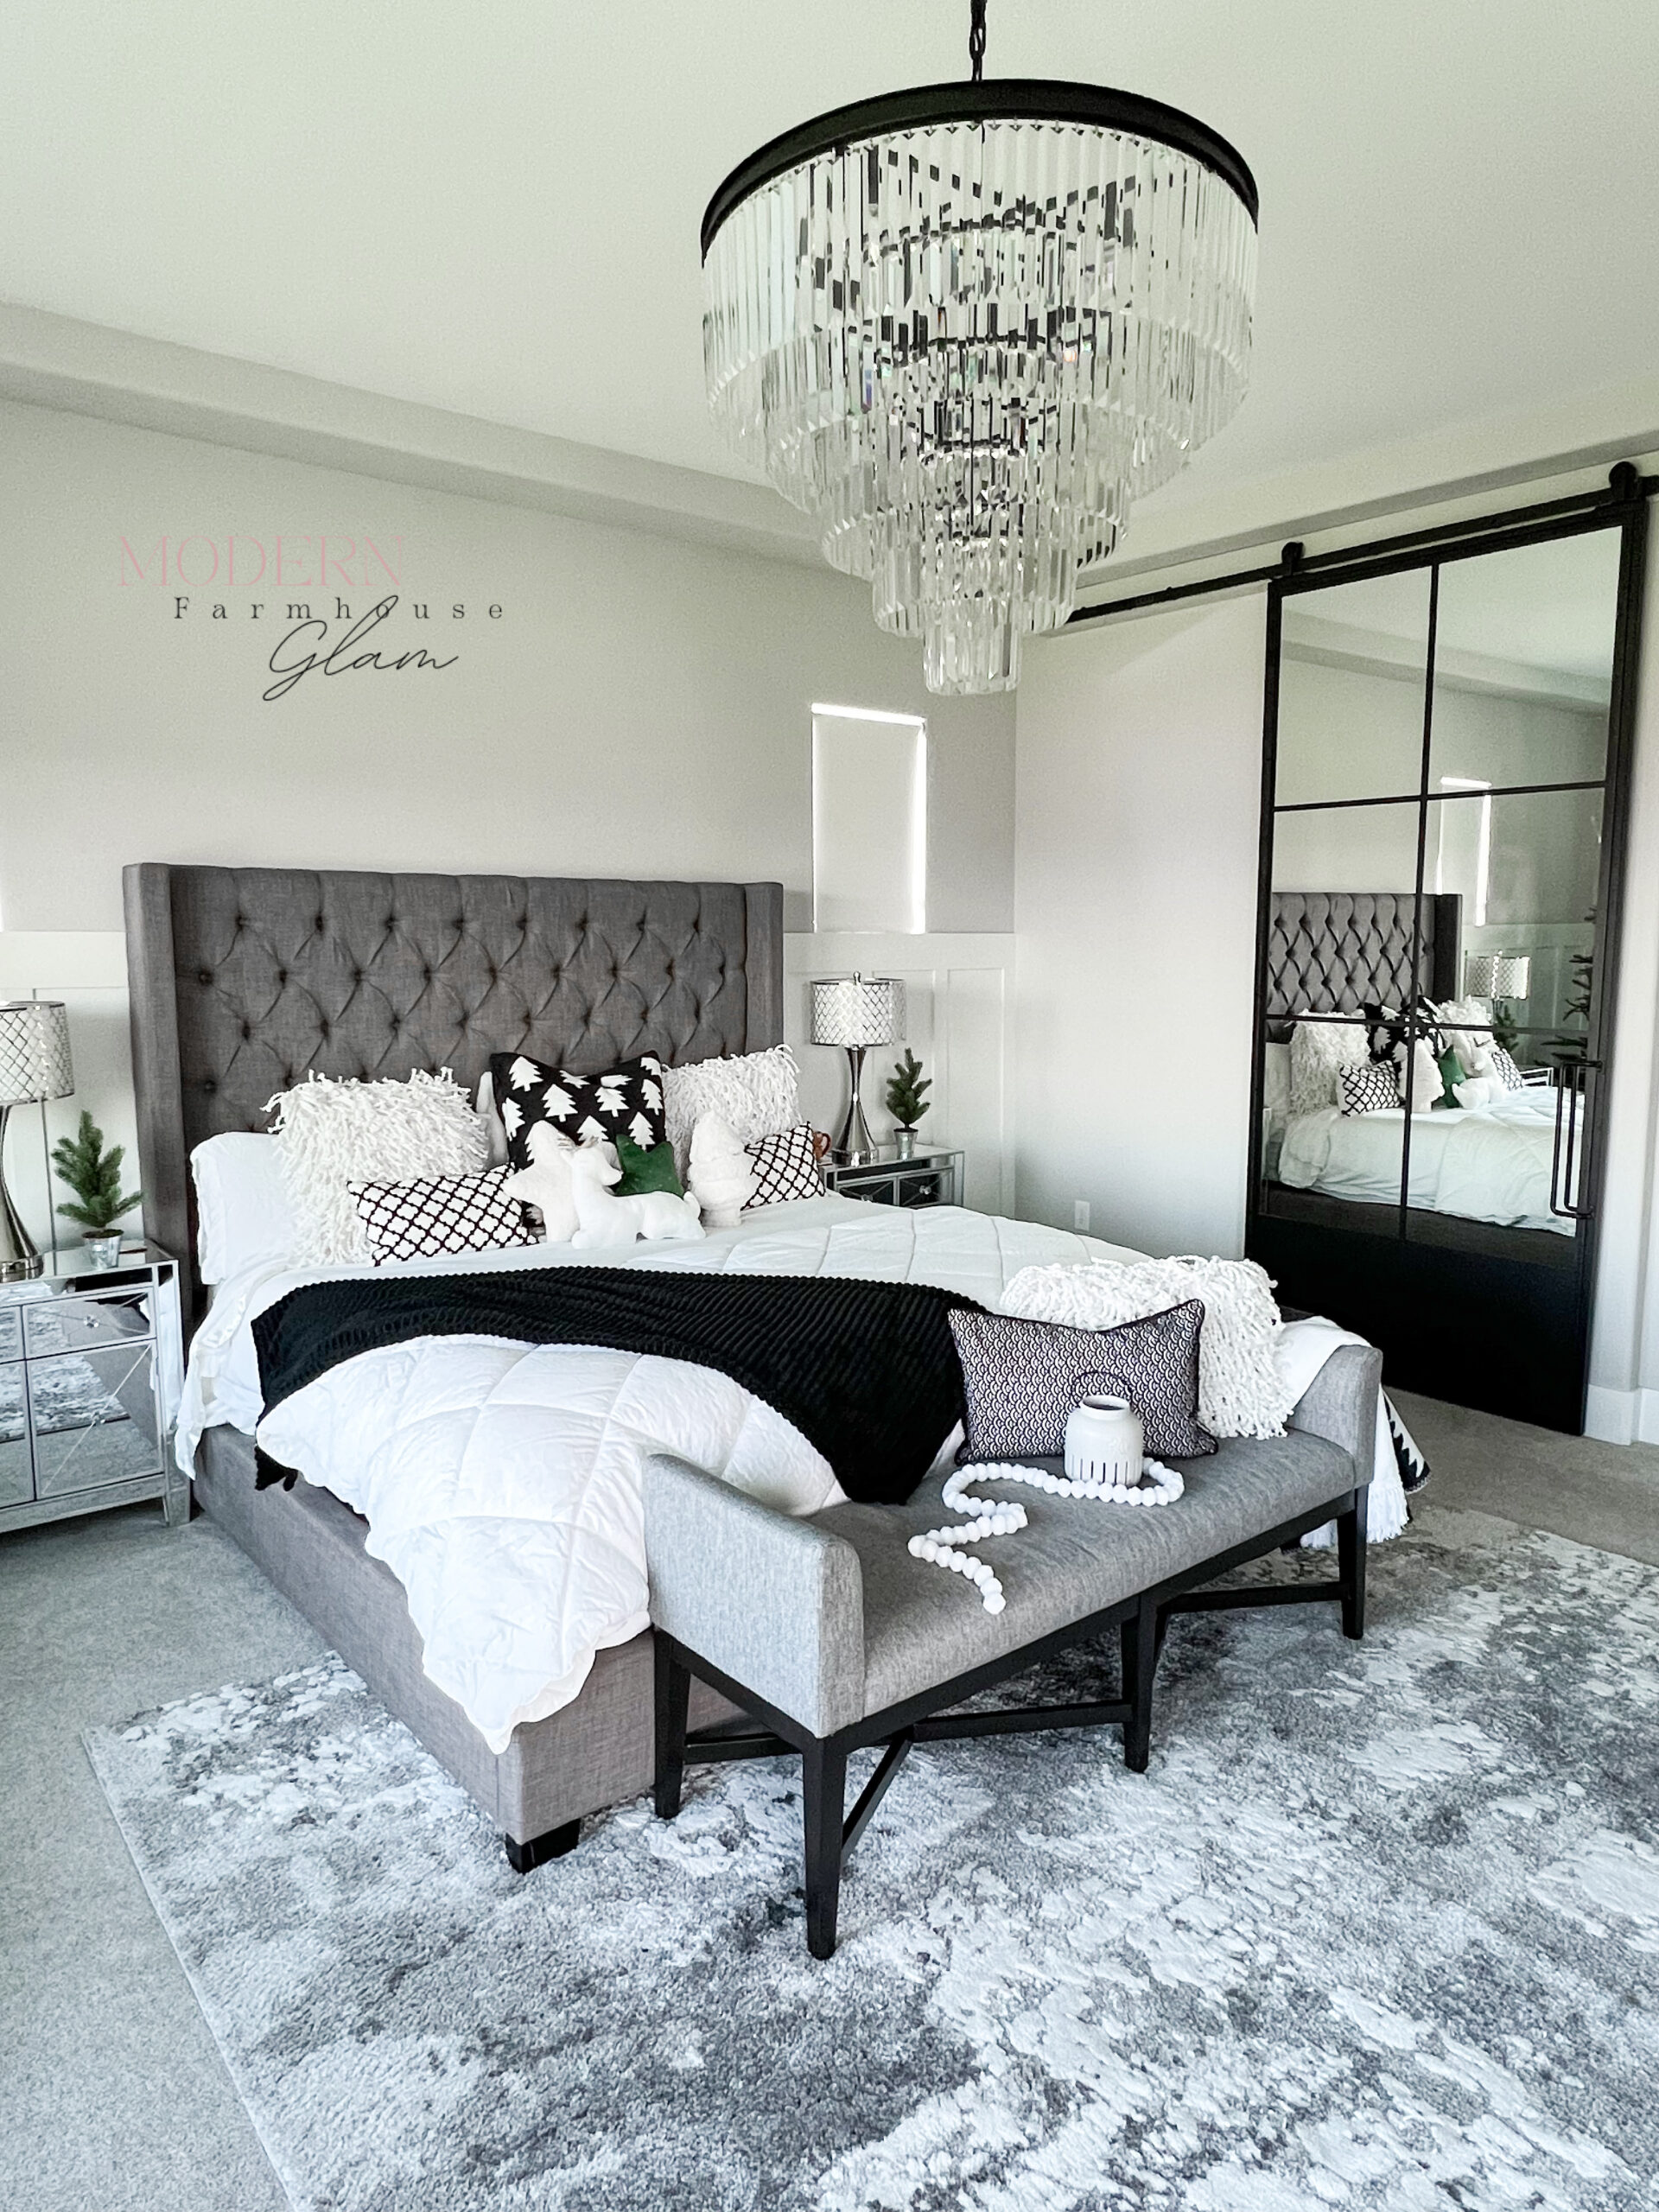 neutral area rug, master bedroom furniture design, nightstands, bedding, tufted headboard, chandelier